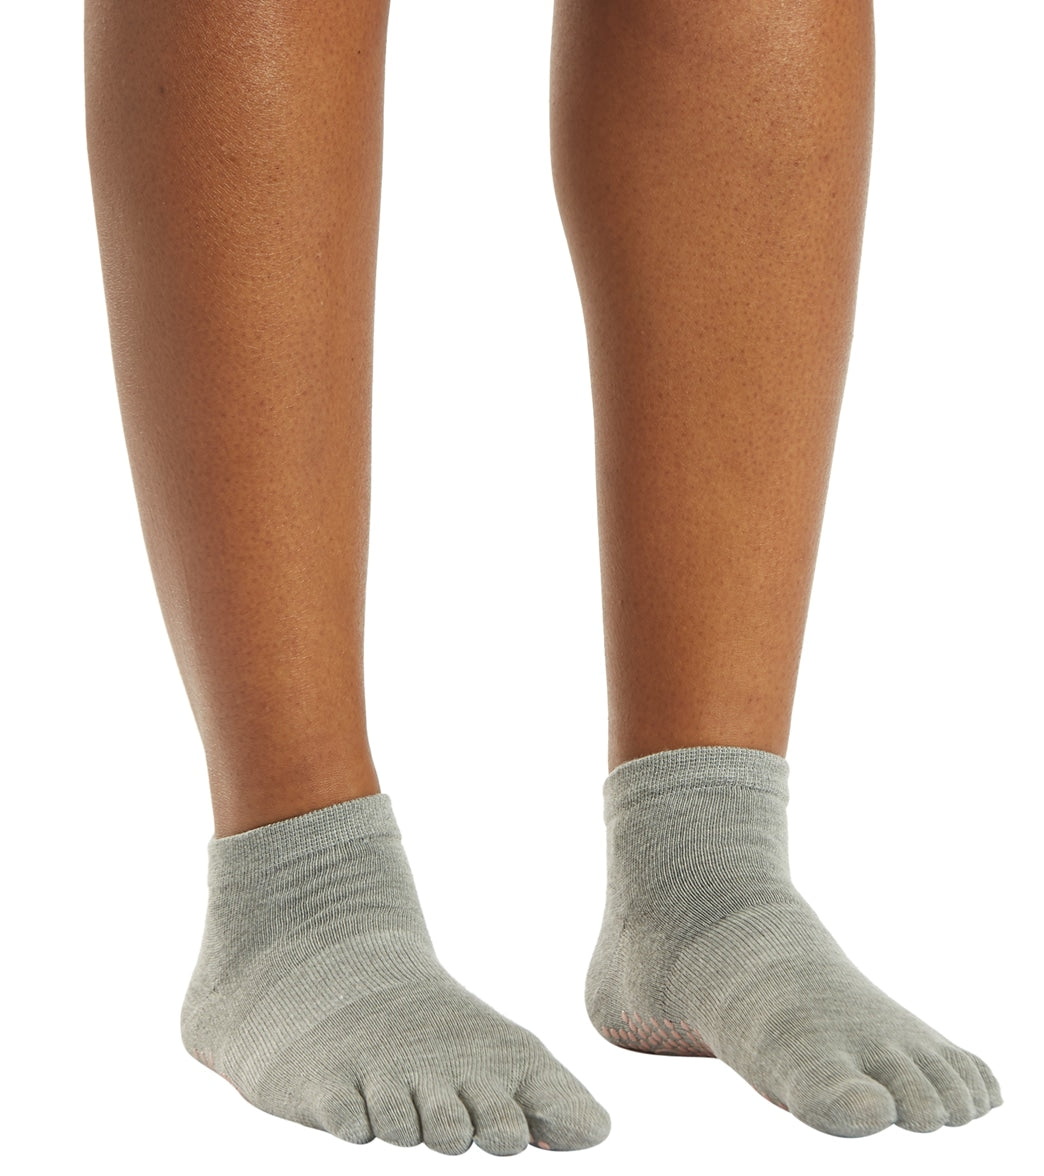 Gaiam Toeless Yoga Socks  Toeless yoga socks, Yoga socks, Gaiam